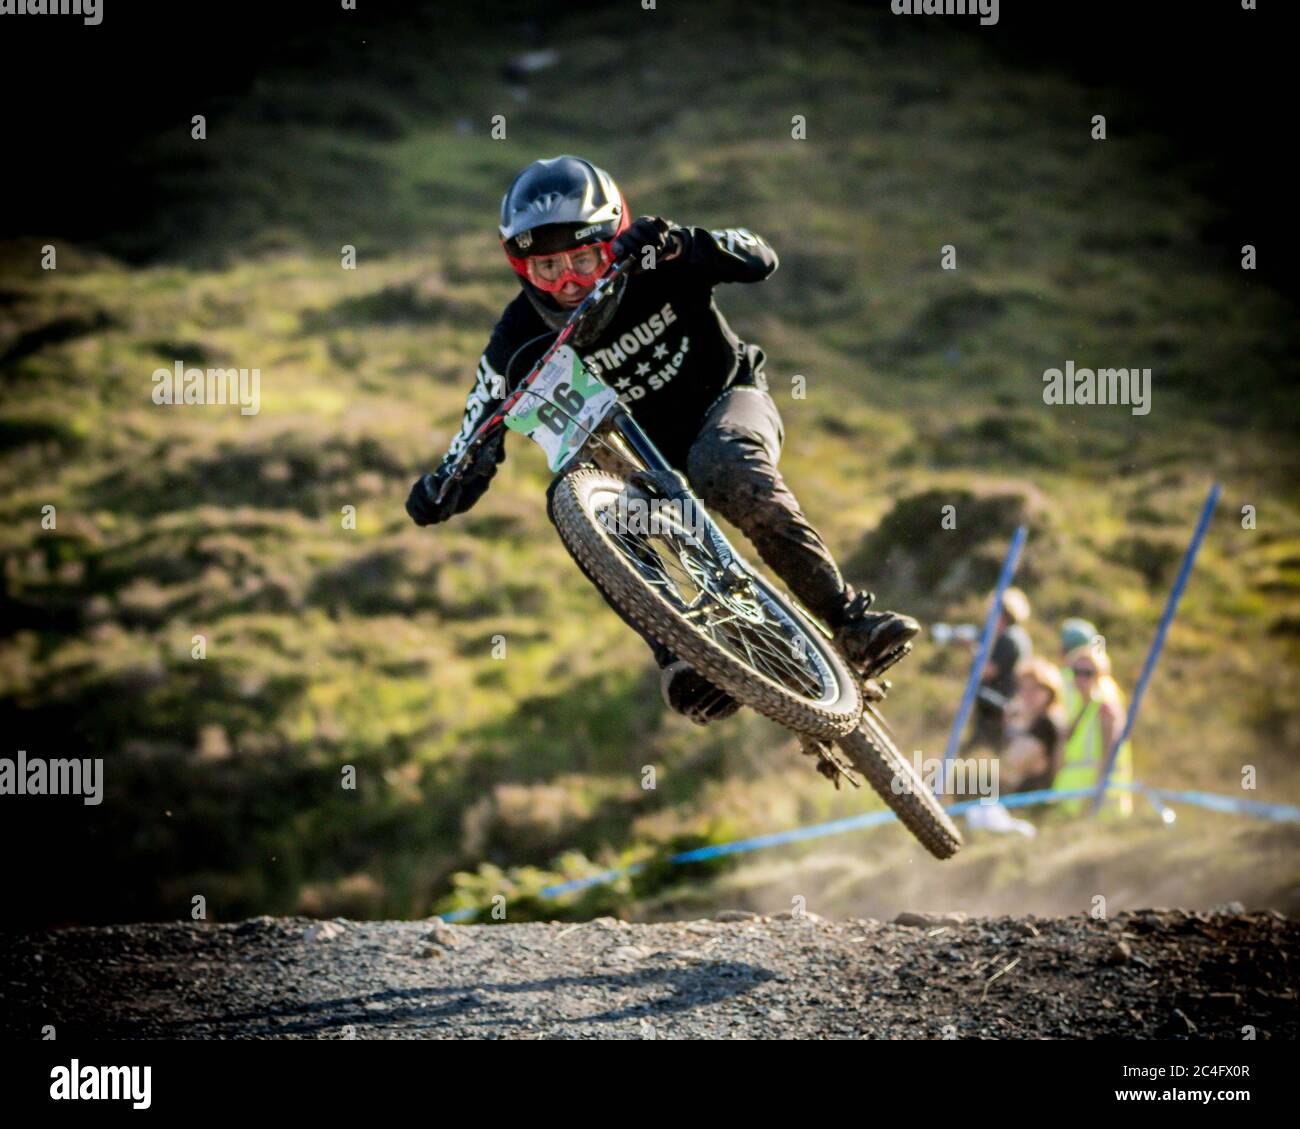 Carreras de bicicletas de montaña en descenso, Escocia Fotografía de stock  - Alamy